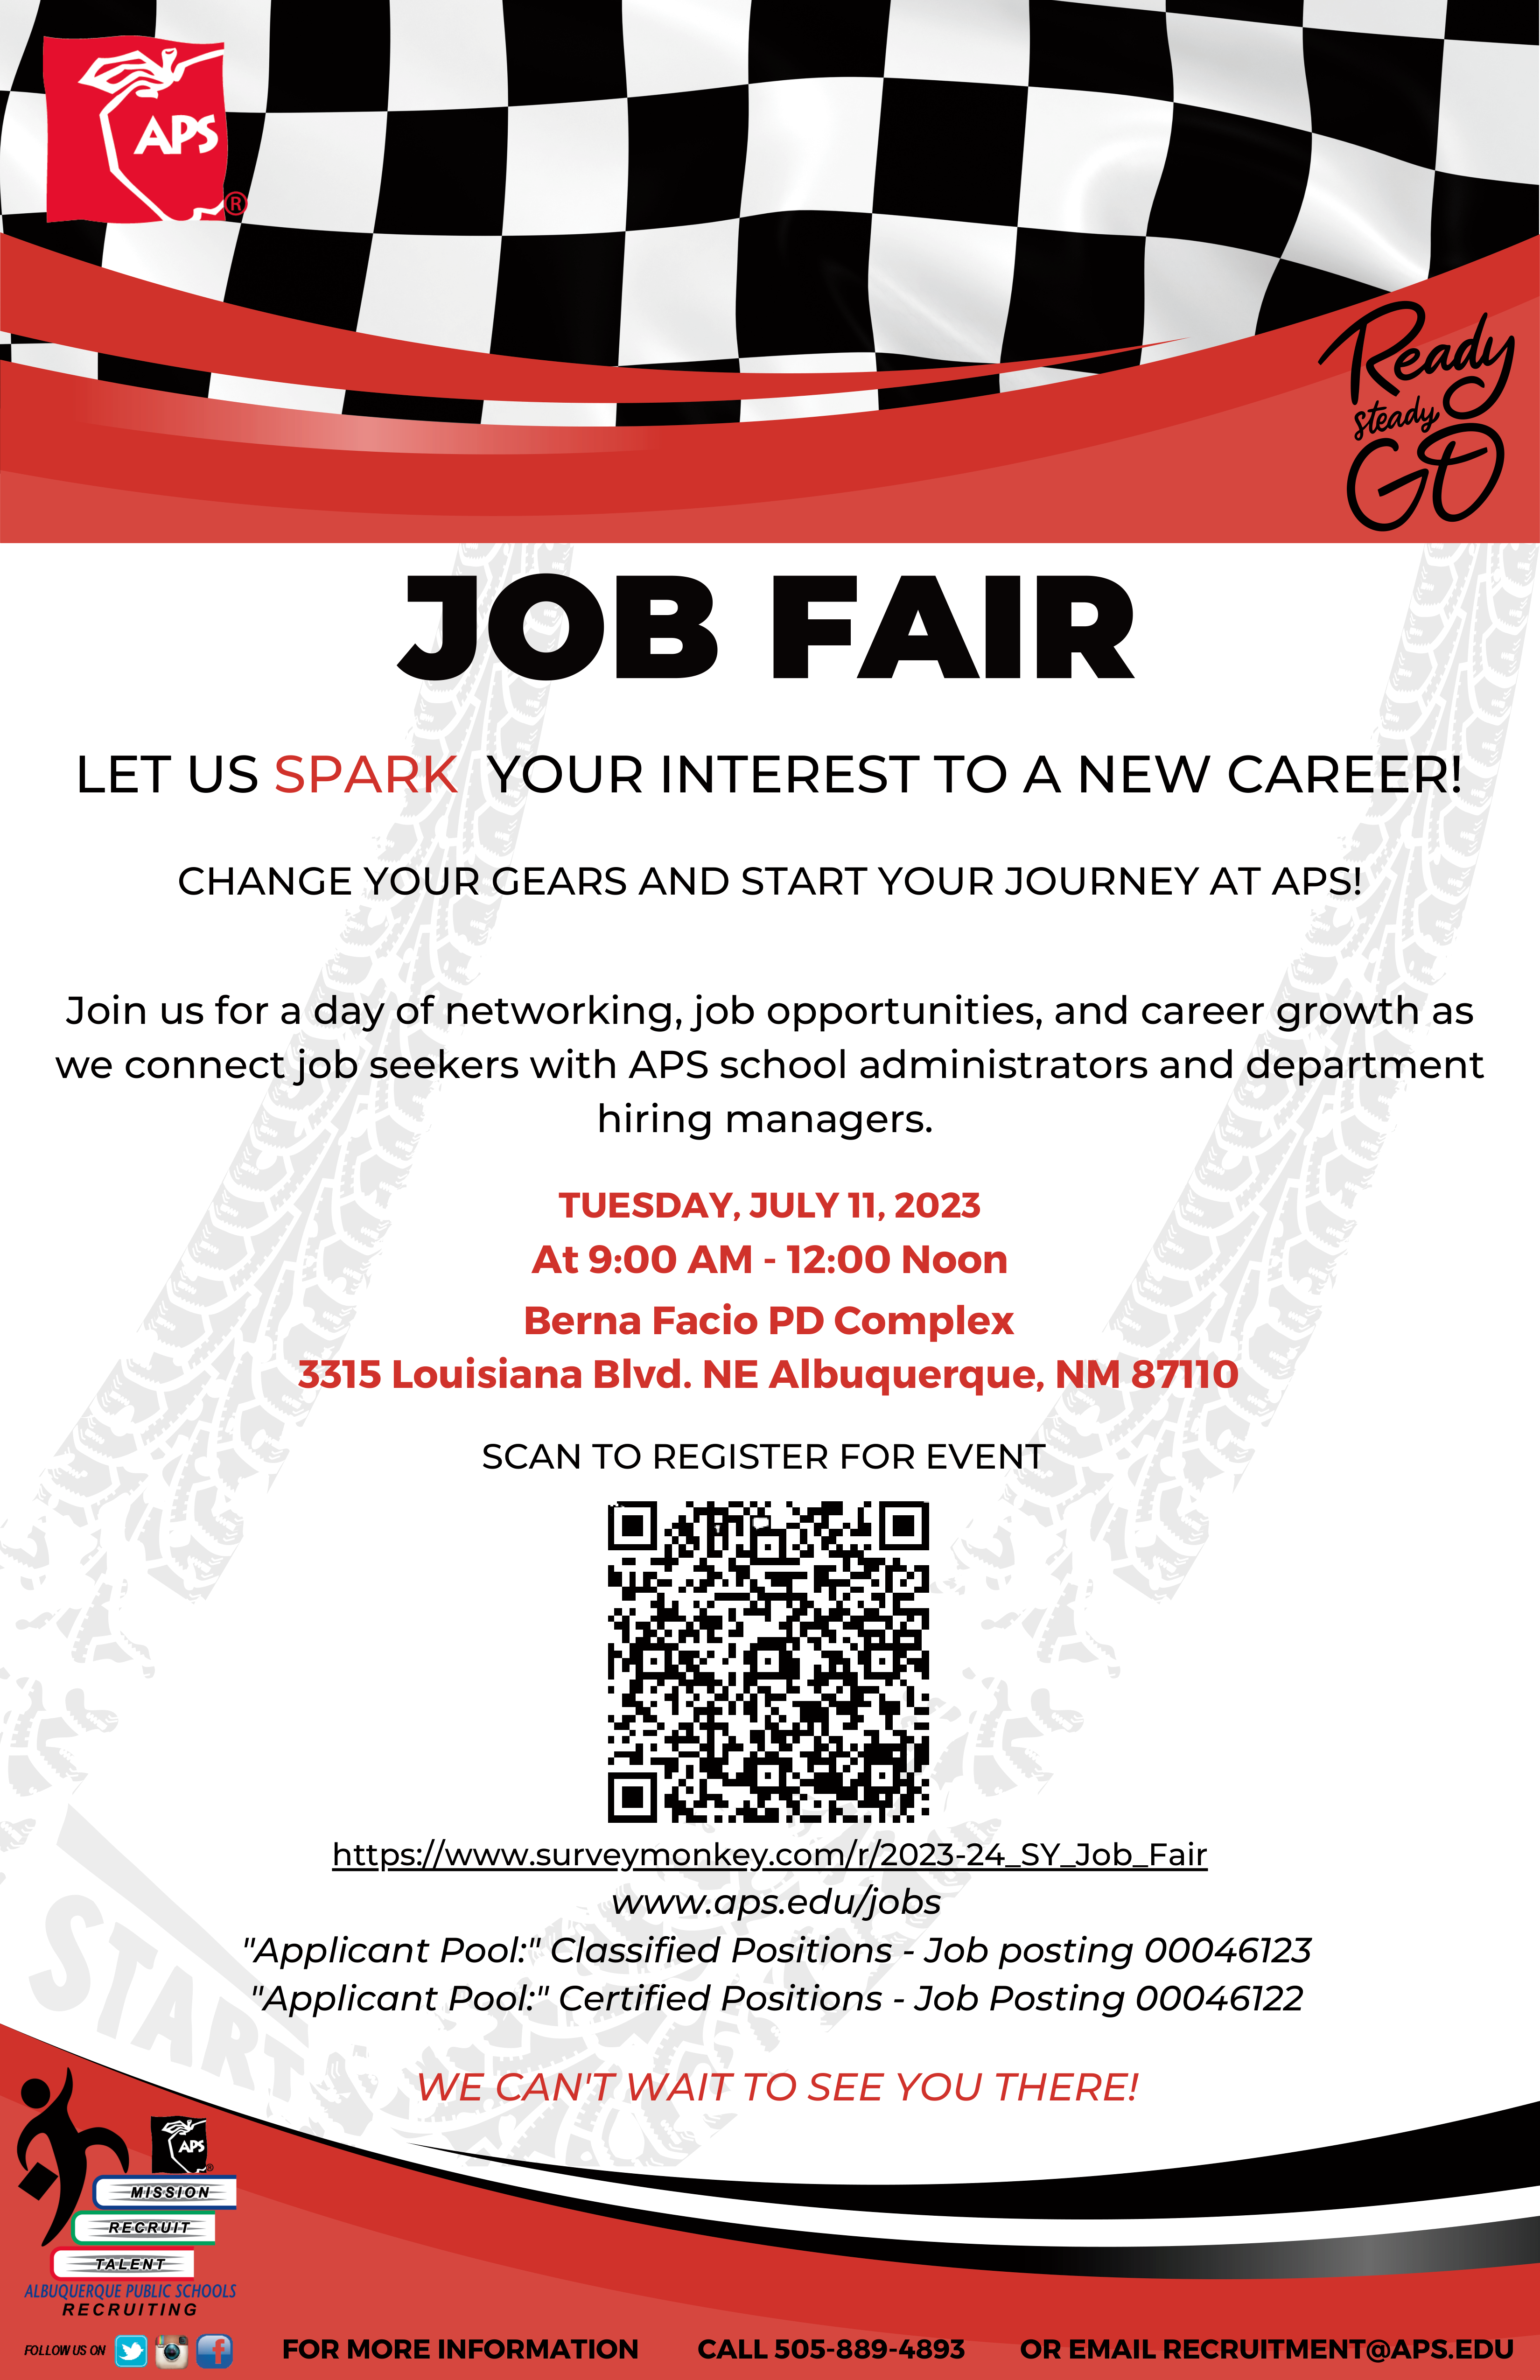 APS Job Fair flyer